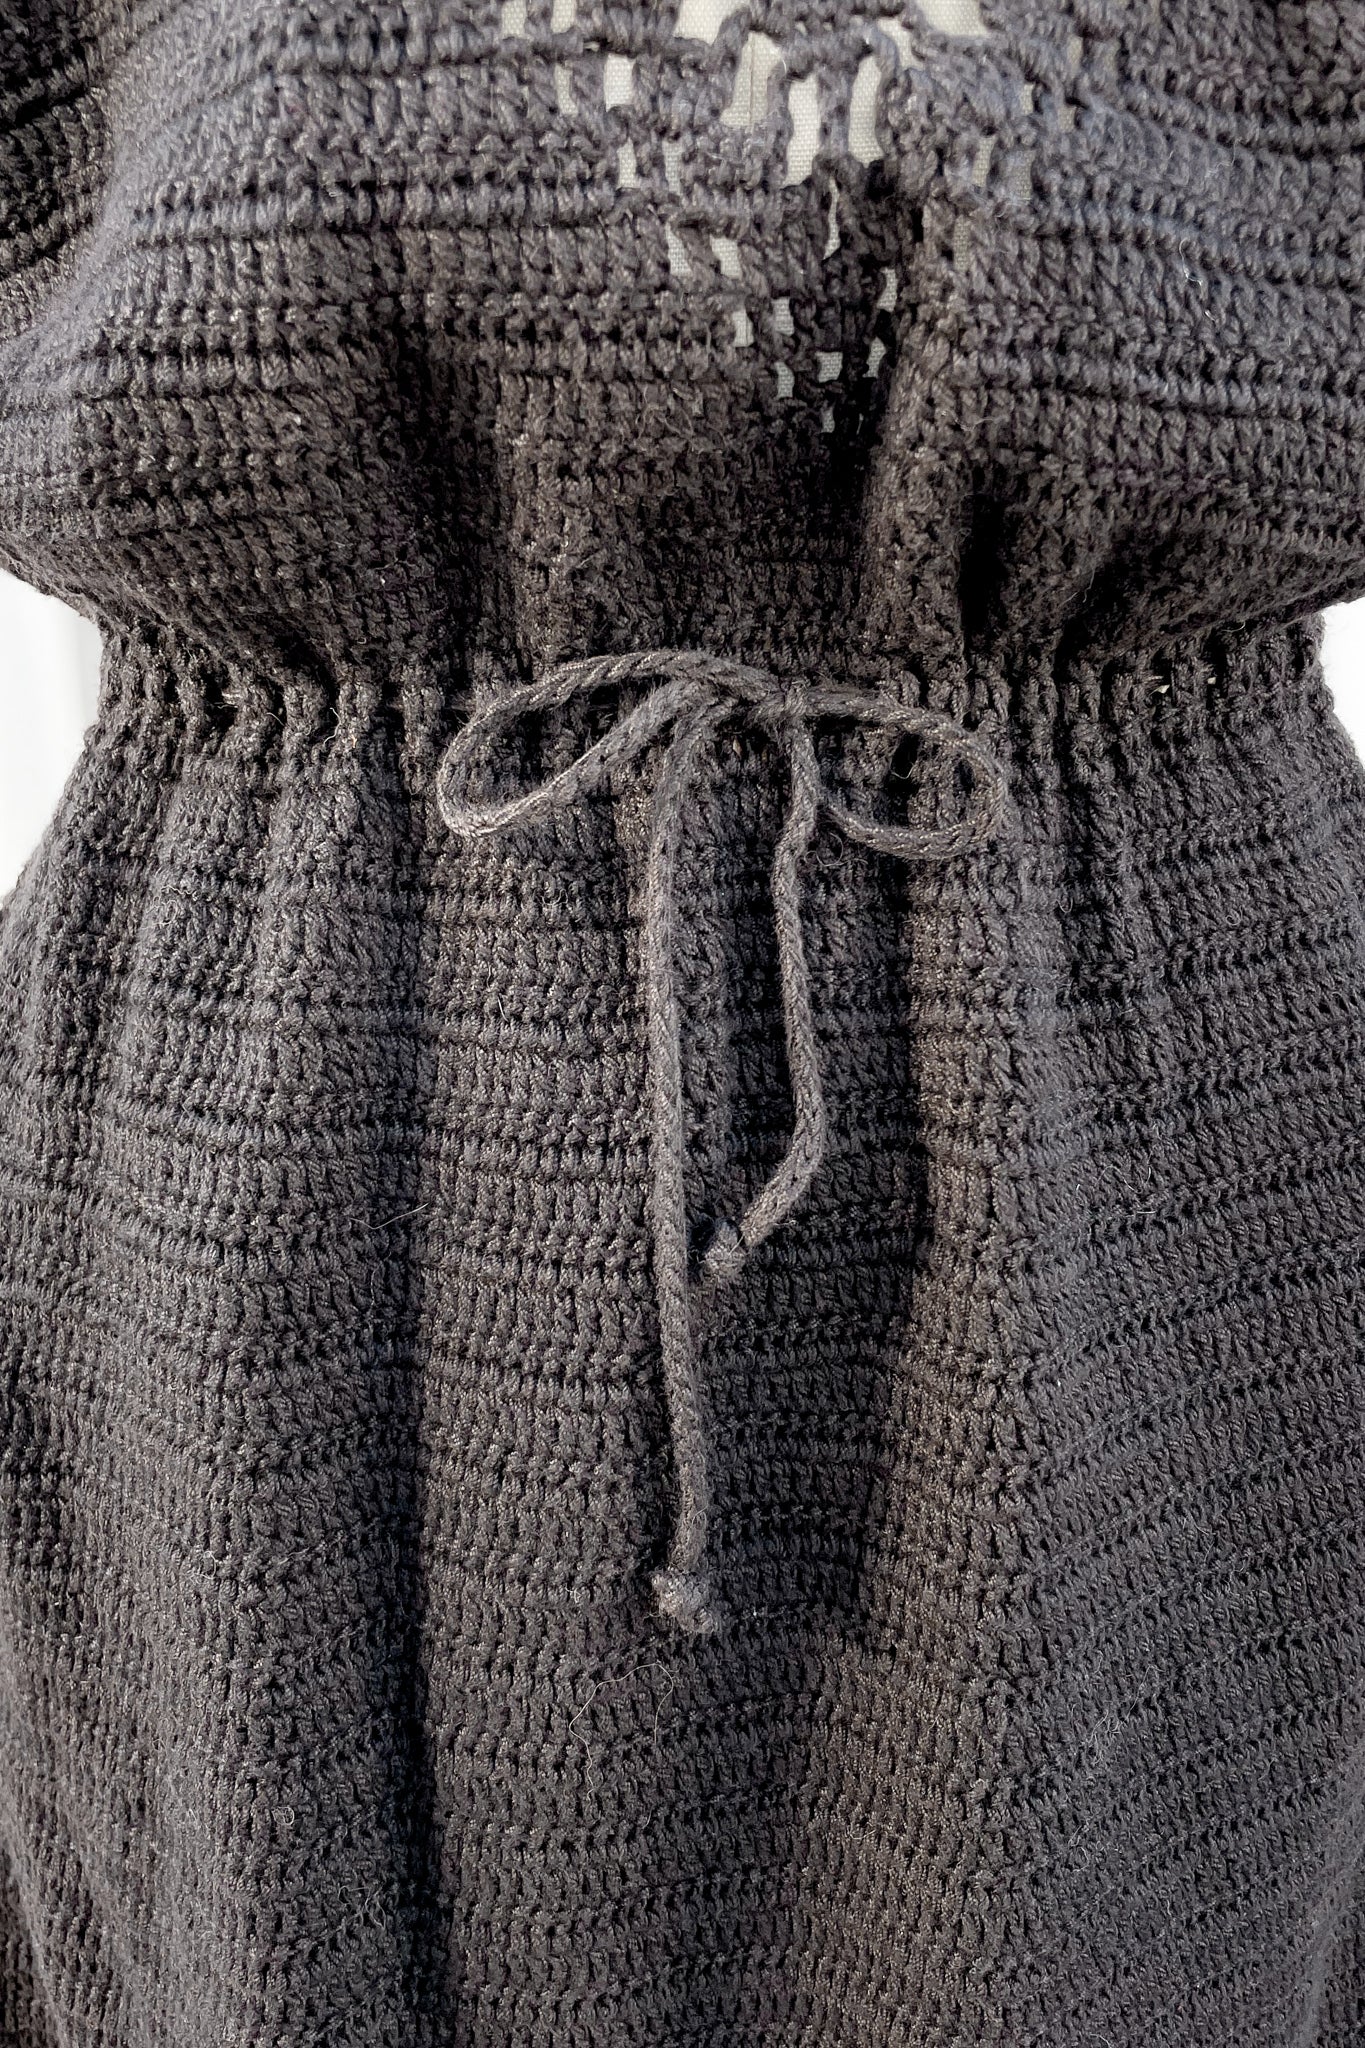 Vintage Hand-Crocheted Black Midi Dress